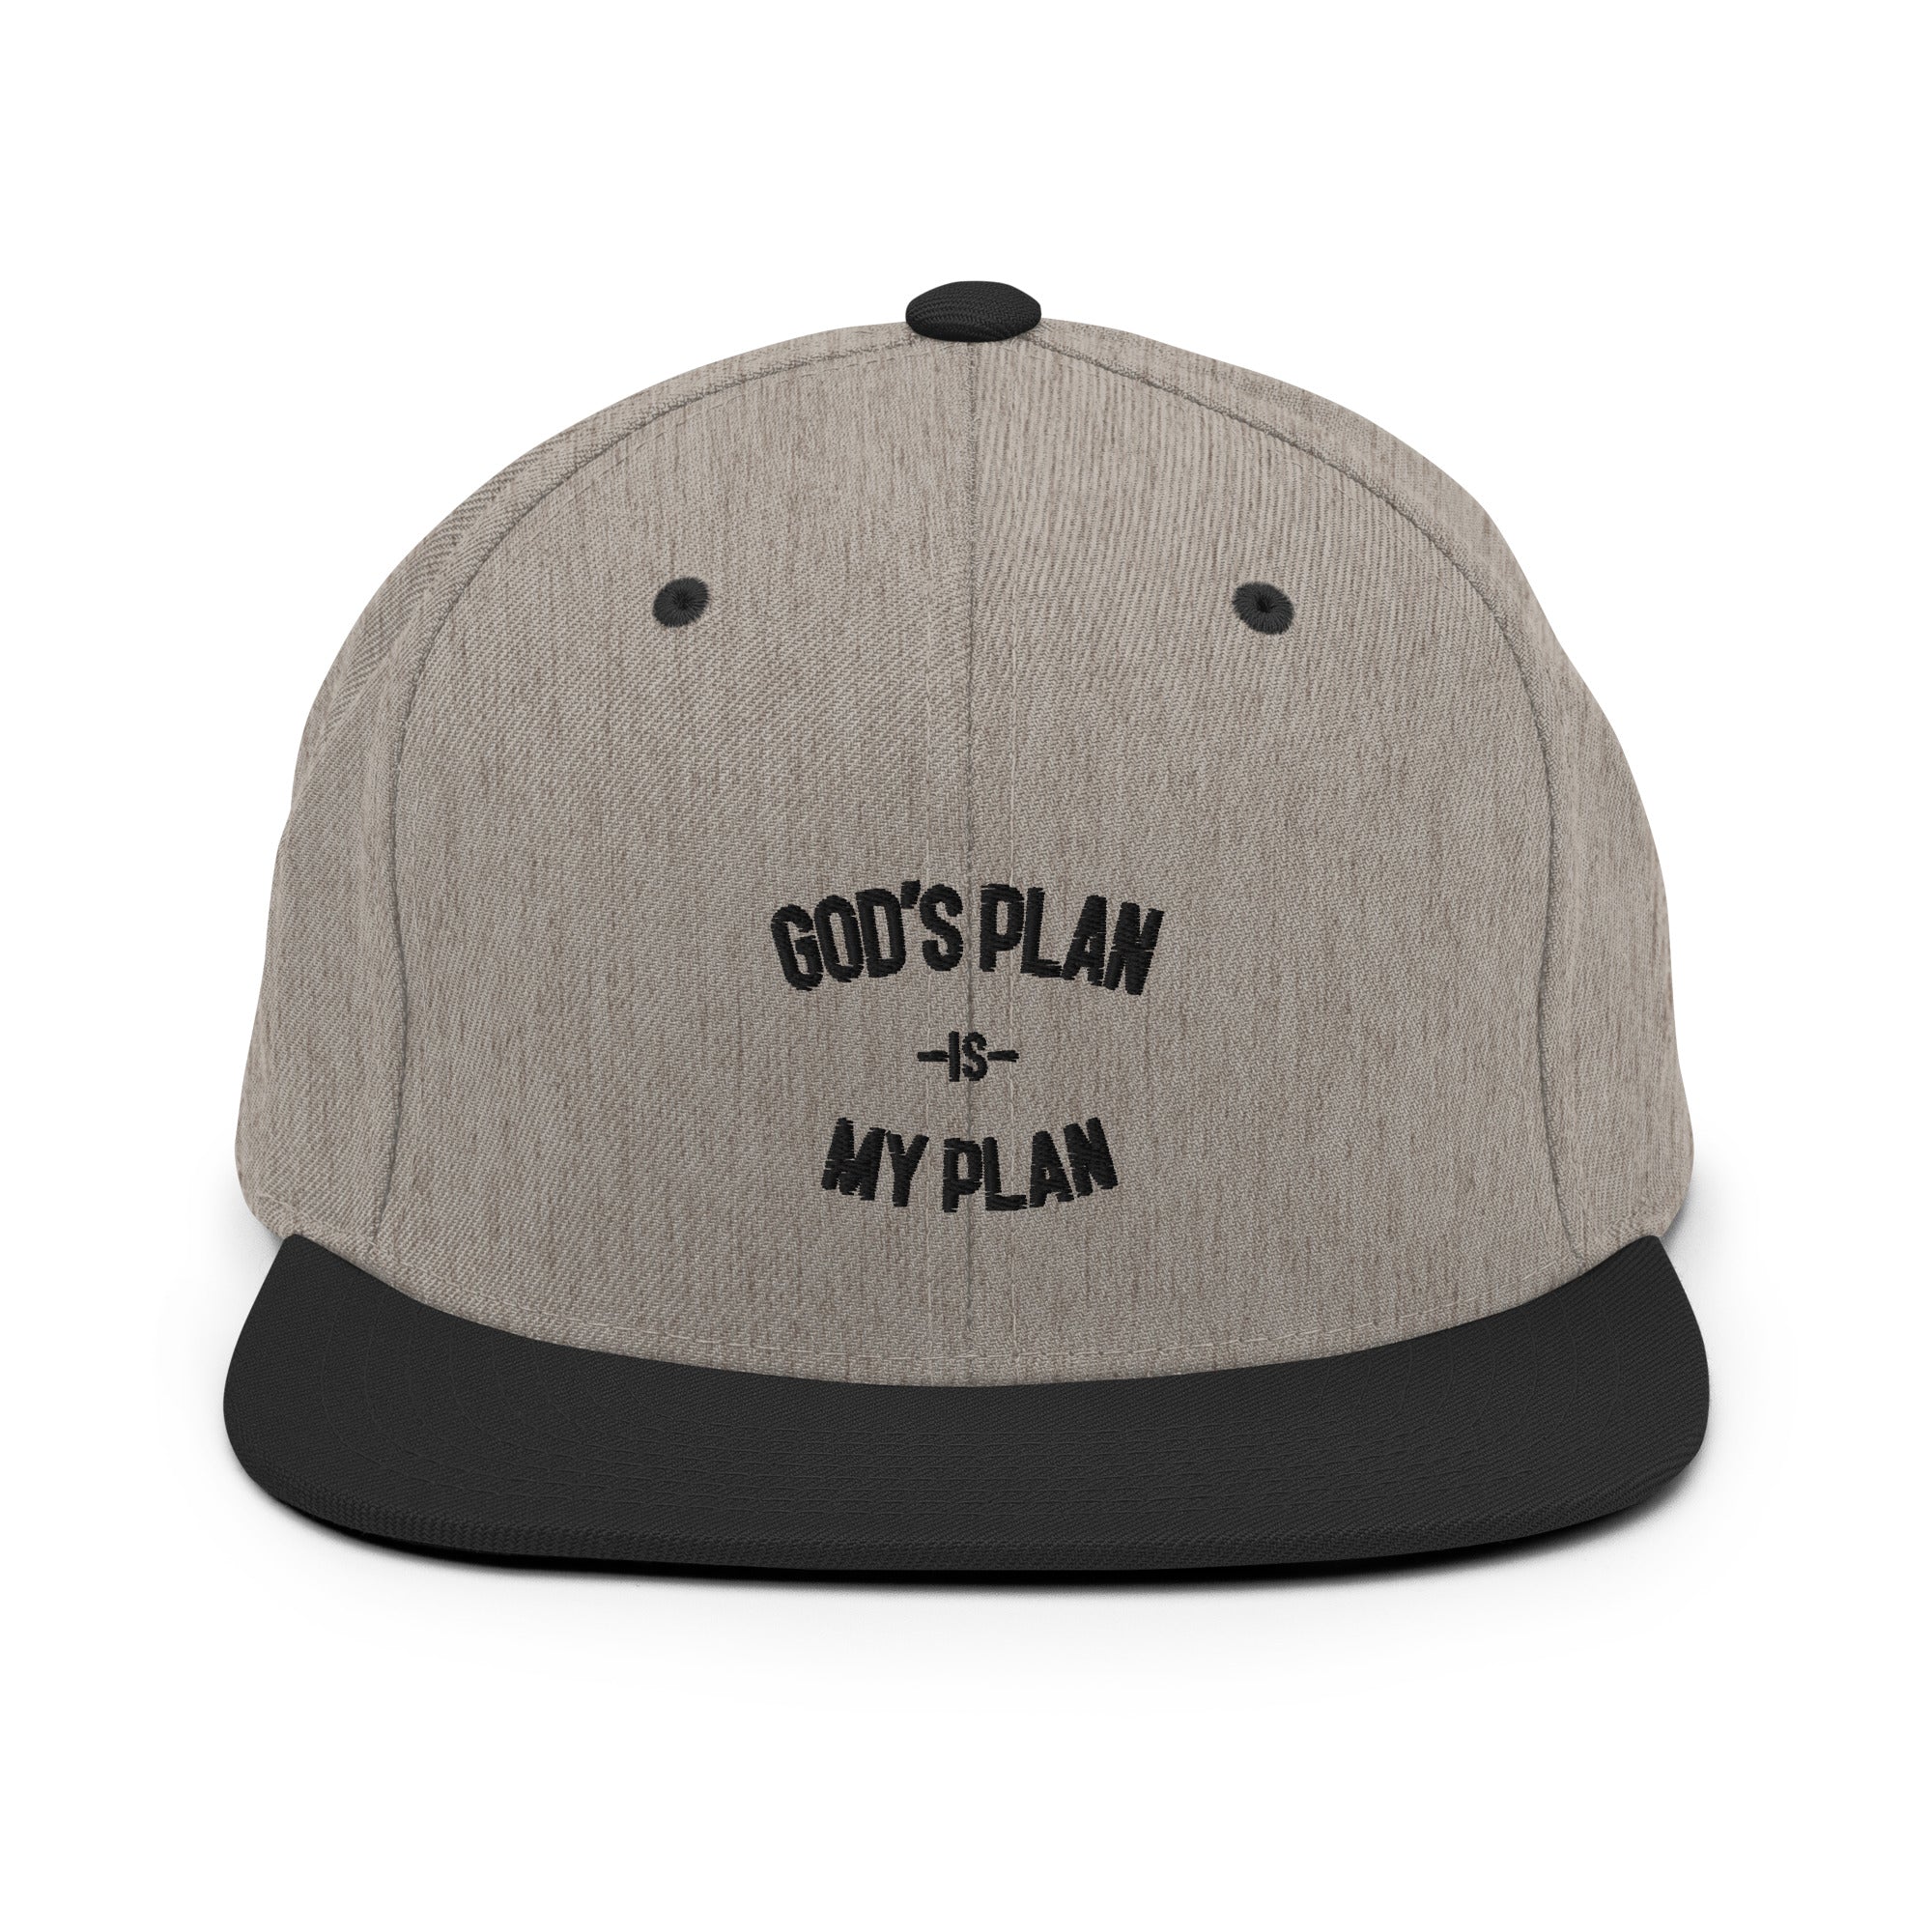 God's Plan My Plan Original Snapback Hat